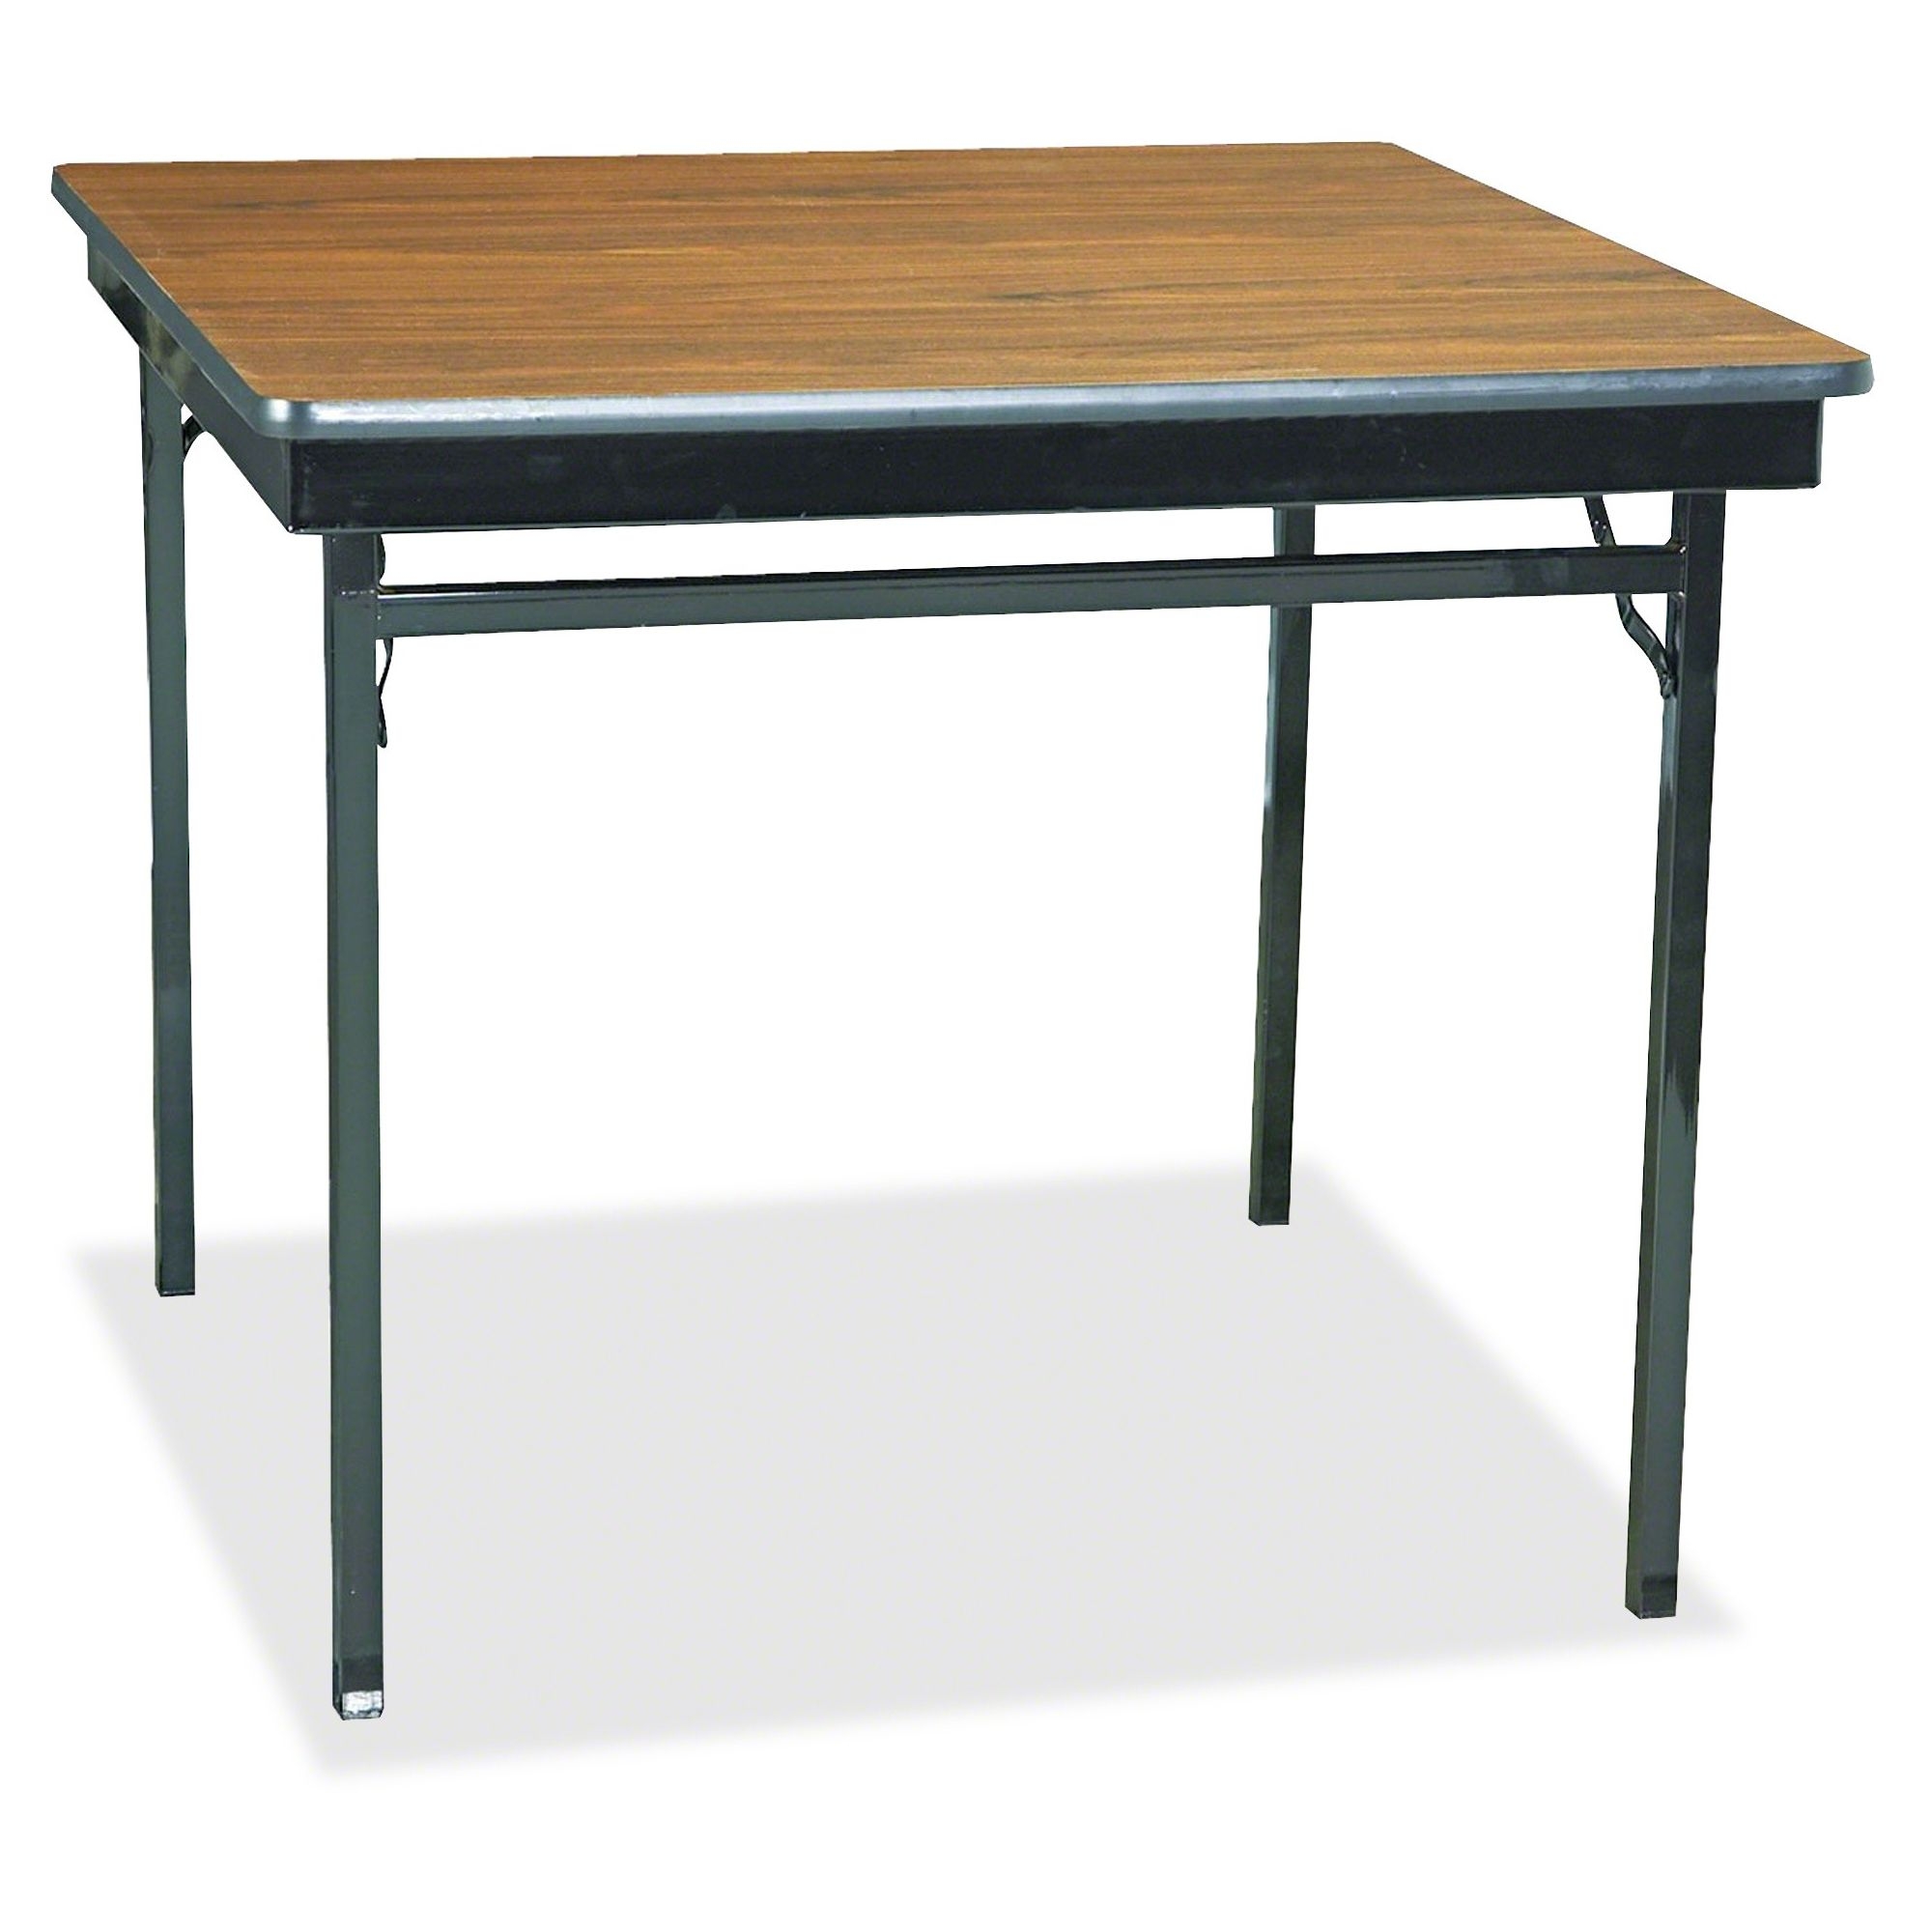 Barricks CL36WA Special Size Folding Table, Square, 36w x 36d x 30h, Walnut